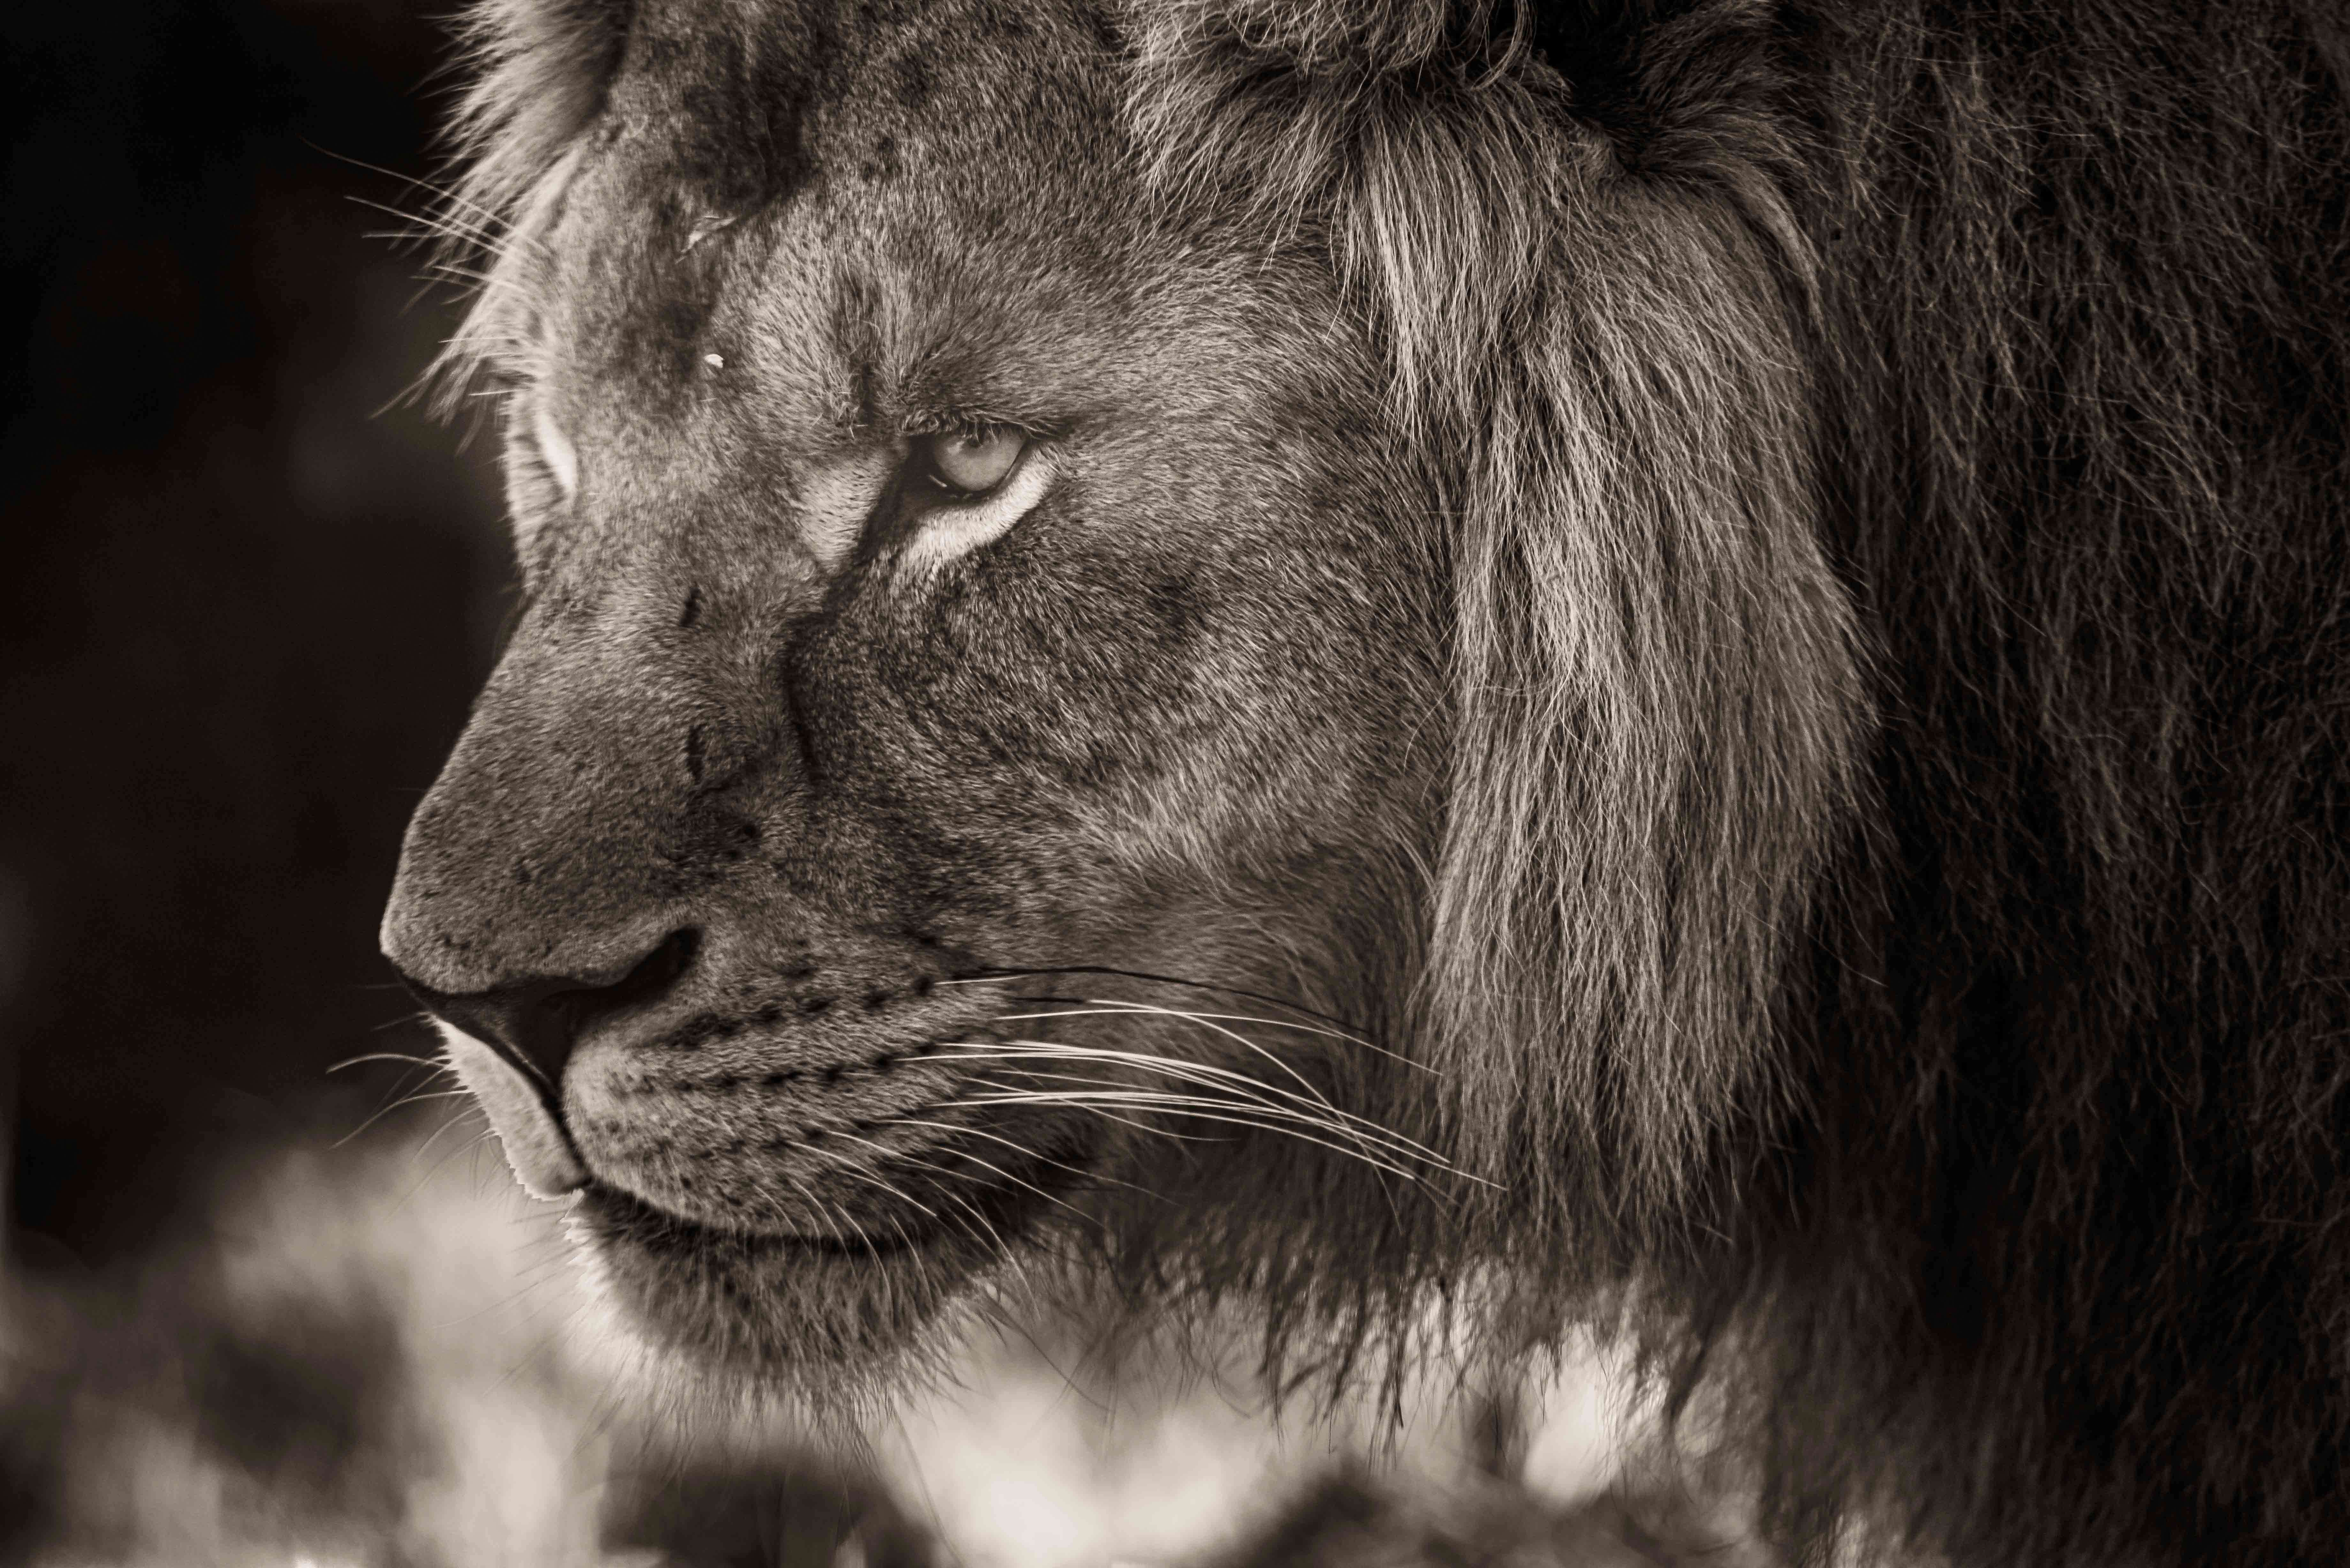 SEMD224 - DSC_7659 Sepia - 
African Savannah Lion, Taronga Zoo,  Sydney, NSW, Australia.
1st July 2020 - 2.35pm
Camera - Nikon D800 
F5.6 - ISO 800 - 1/320 second - Focal Length 300mm : Wildlife - Sepia : Stephen E-Moran - Fine Art Photography